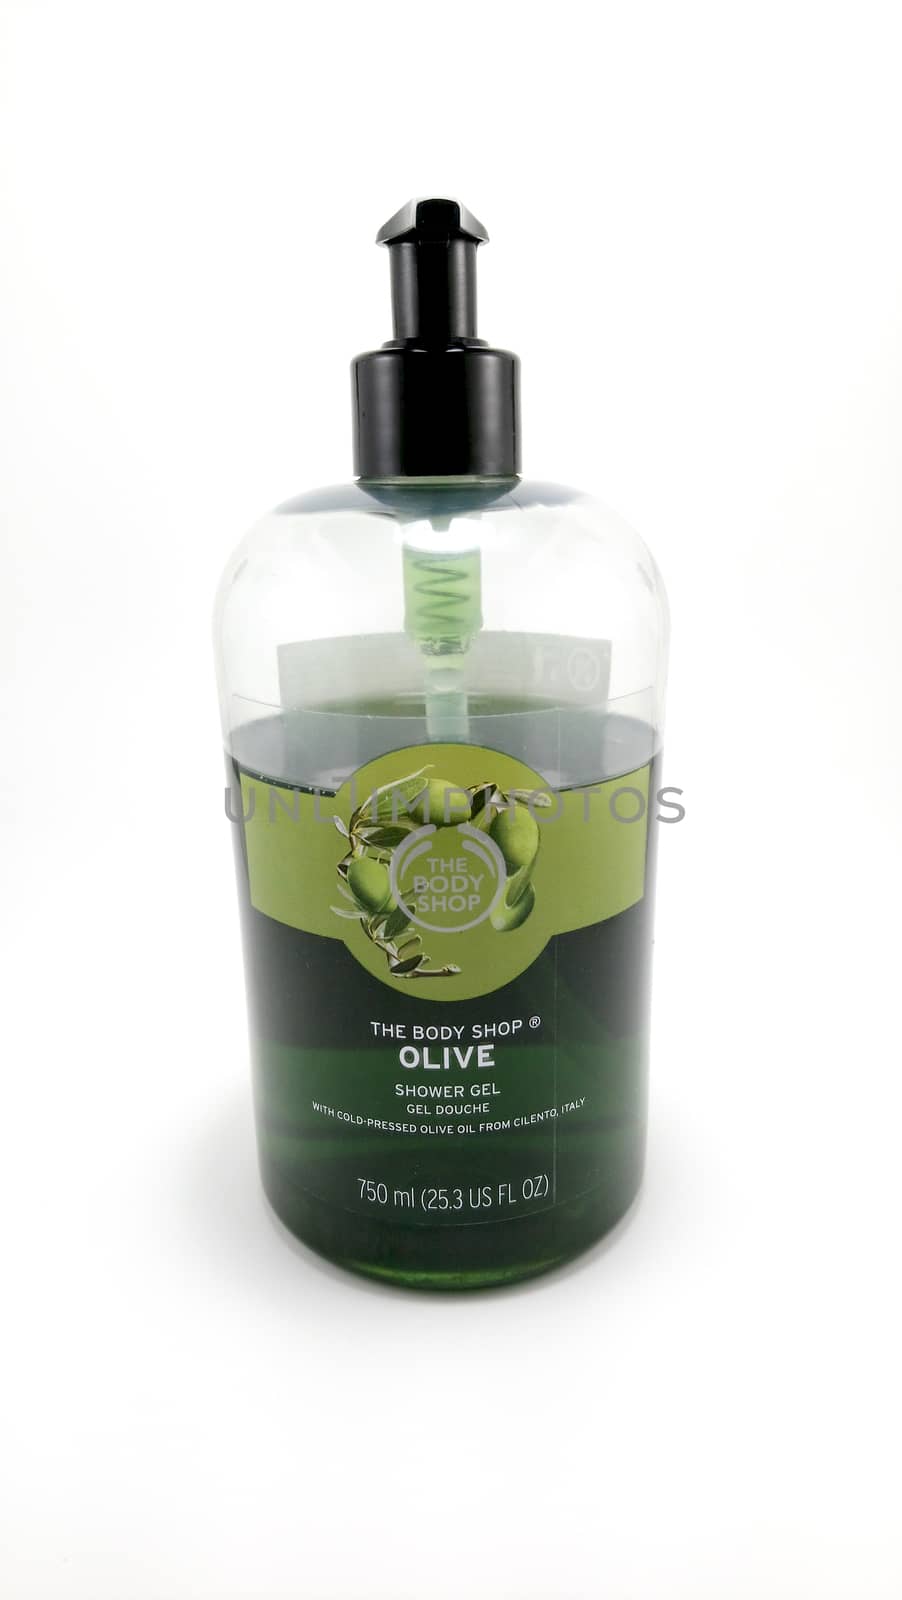 MANILA, PH - JUNE 23 - The body shop olive shower gel on June 23, 2020 in Manila, Philippines.